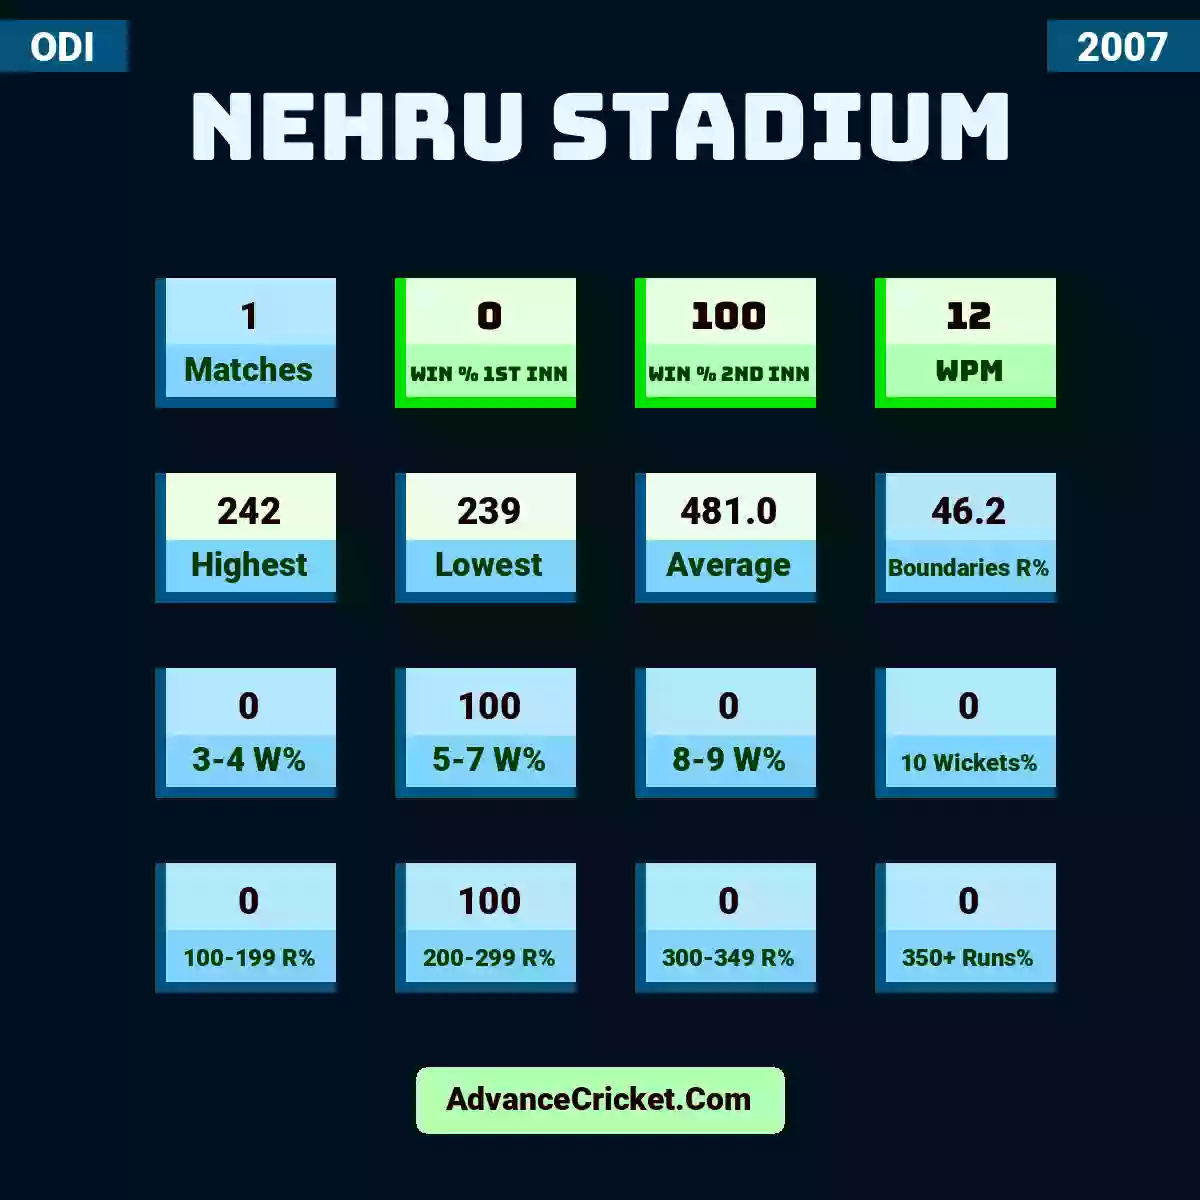 Image showing Nehru Stadium with Matches: 1, Win % 1st Inn: 0, Win % 2nd Inn: 100, WPM: 12, Highest: 242, Lowest: 239, Average: 481.0, Boundaries R%: 46.2, 3-4 W%: 0, 5-7 W%: 100, 8-9 W%: 0, 10 Wickets%: 0, 100-199 R%: 0, 200-299 R%: 100, 300-349 R%: 0, 350+ Runs%: 0.